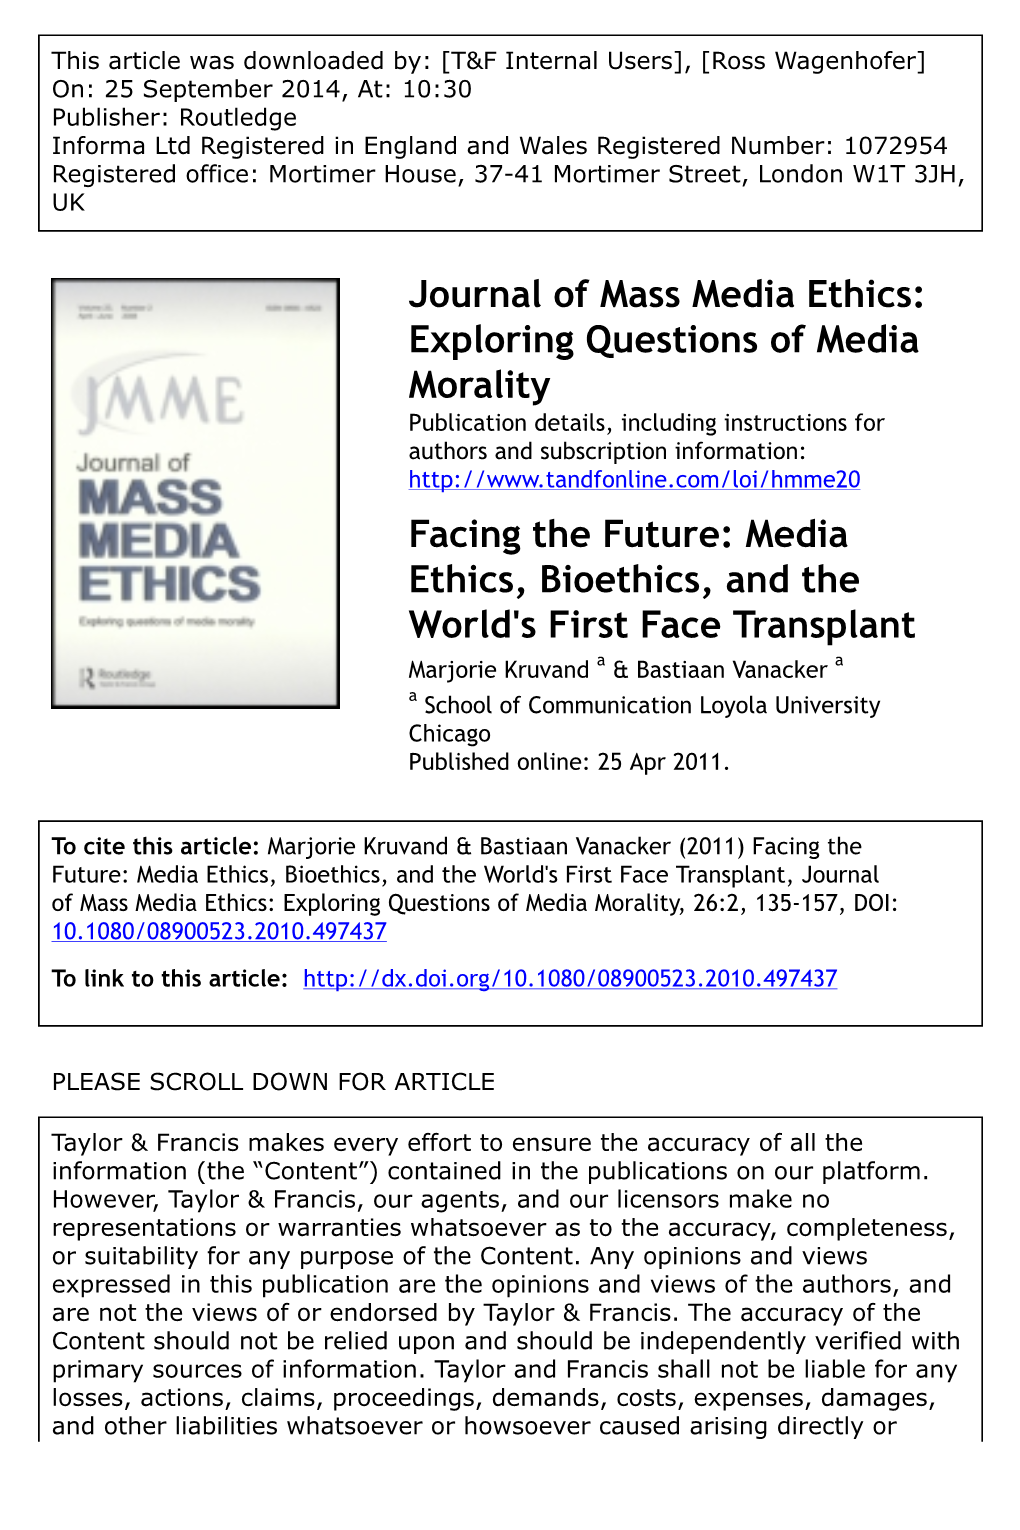 Exploring Questions of Media Morality Facing the Future: Media Ethics